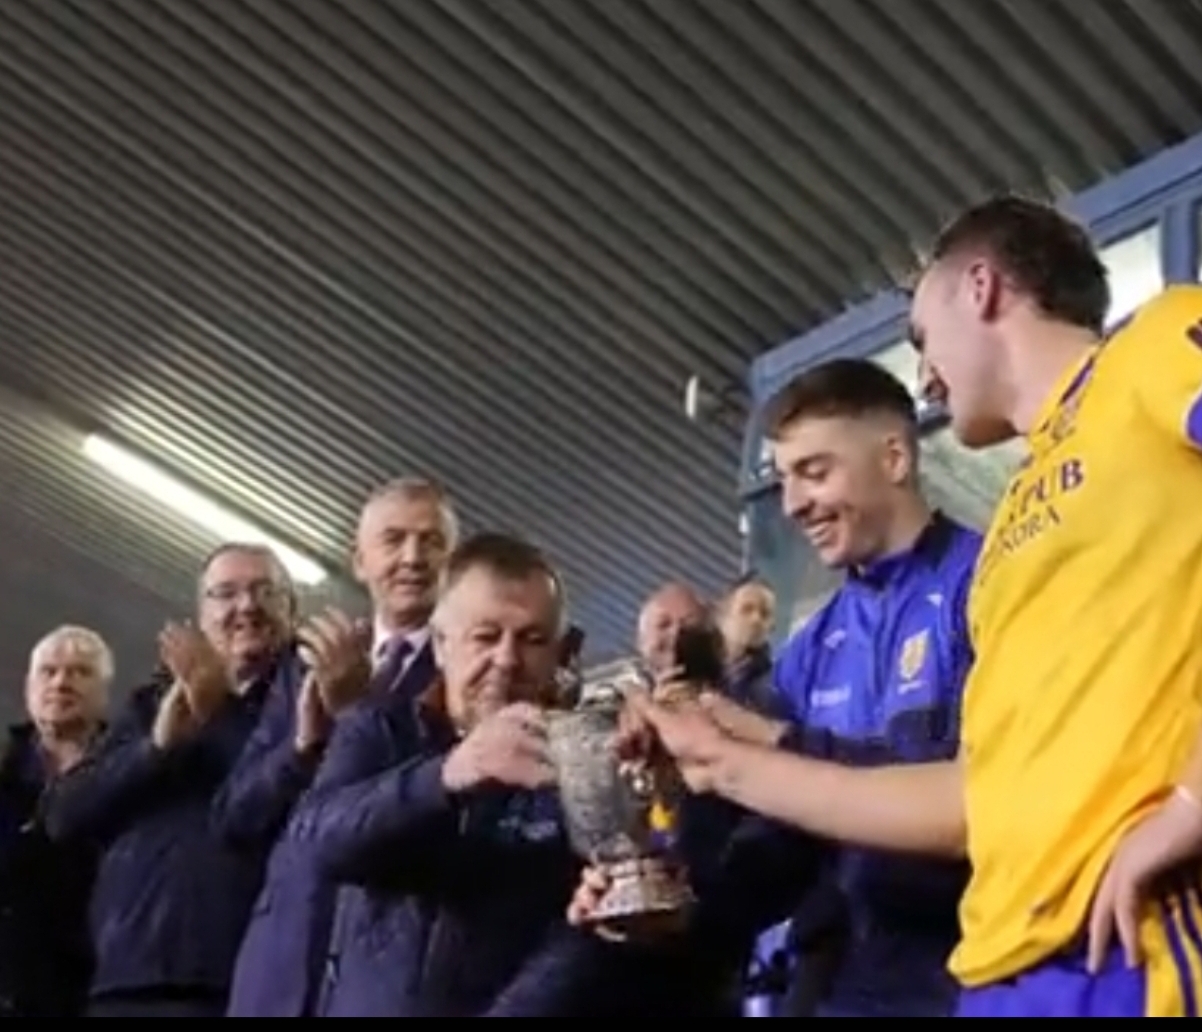 Na Fianna clinch their first-ever Dublin senior hurling championship title